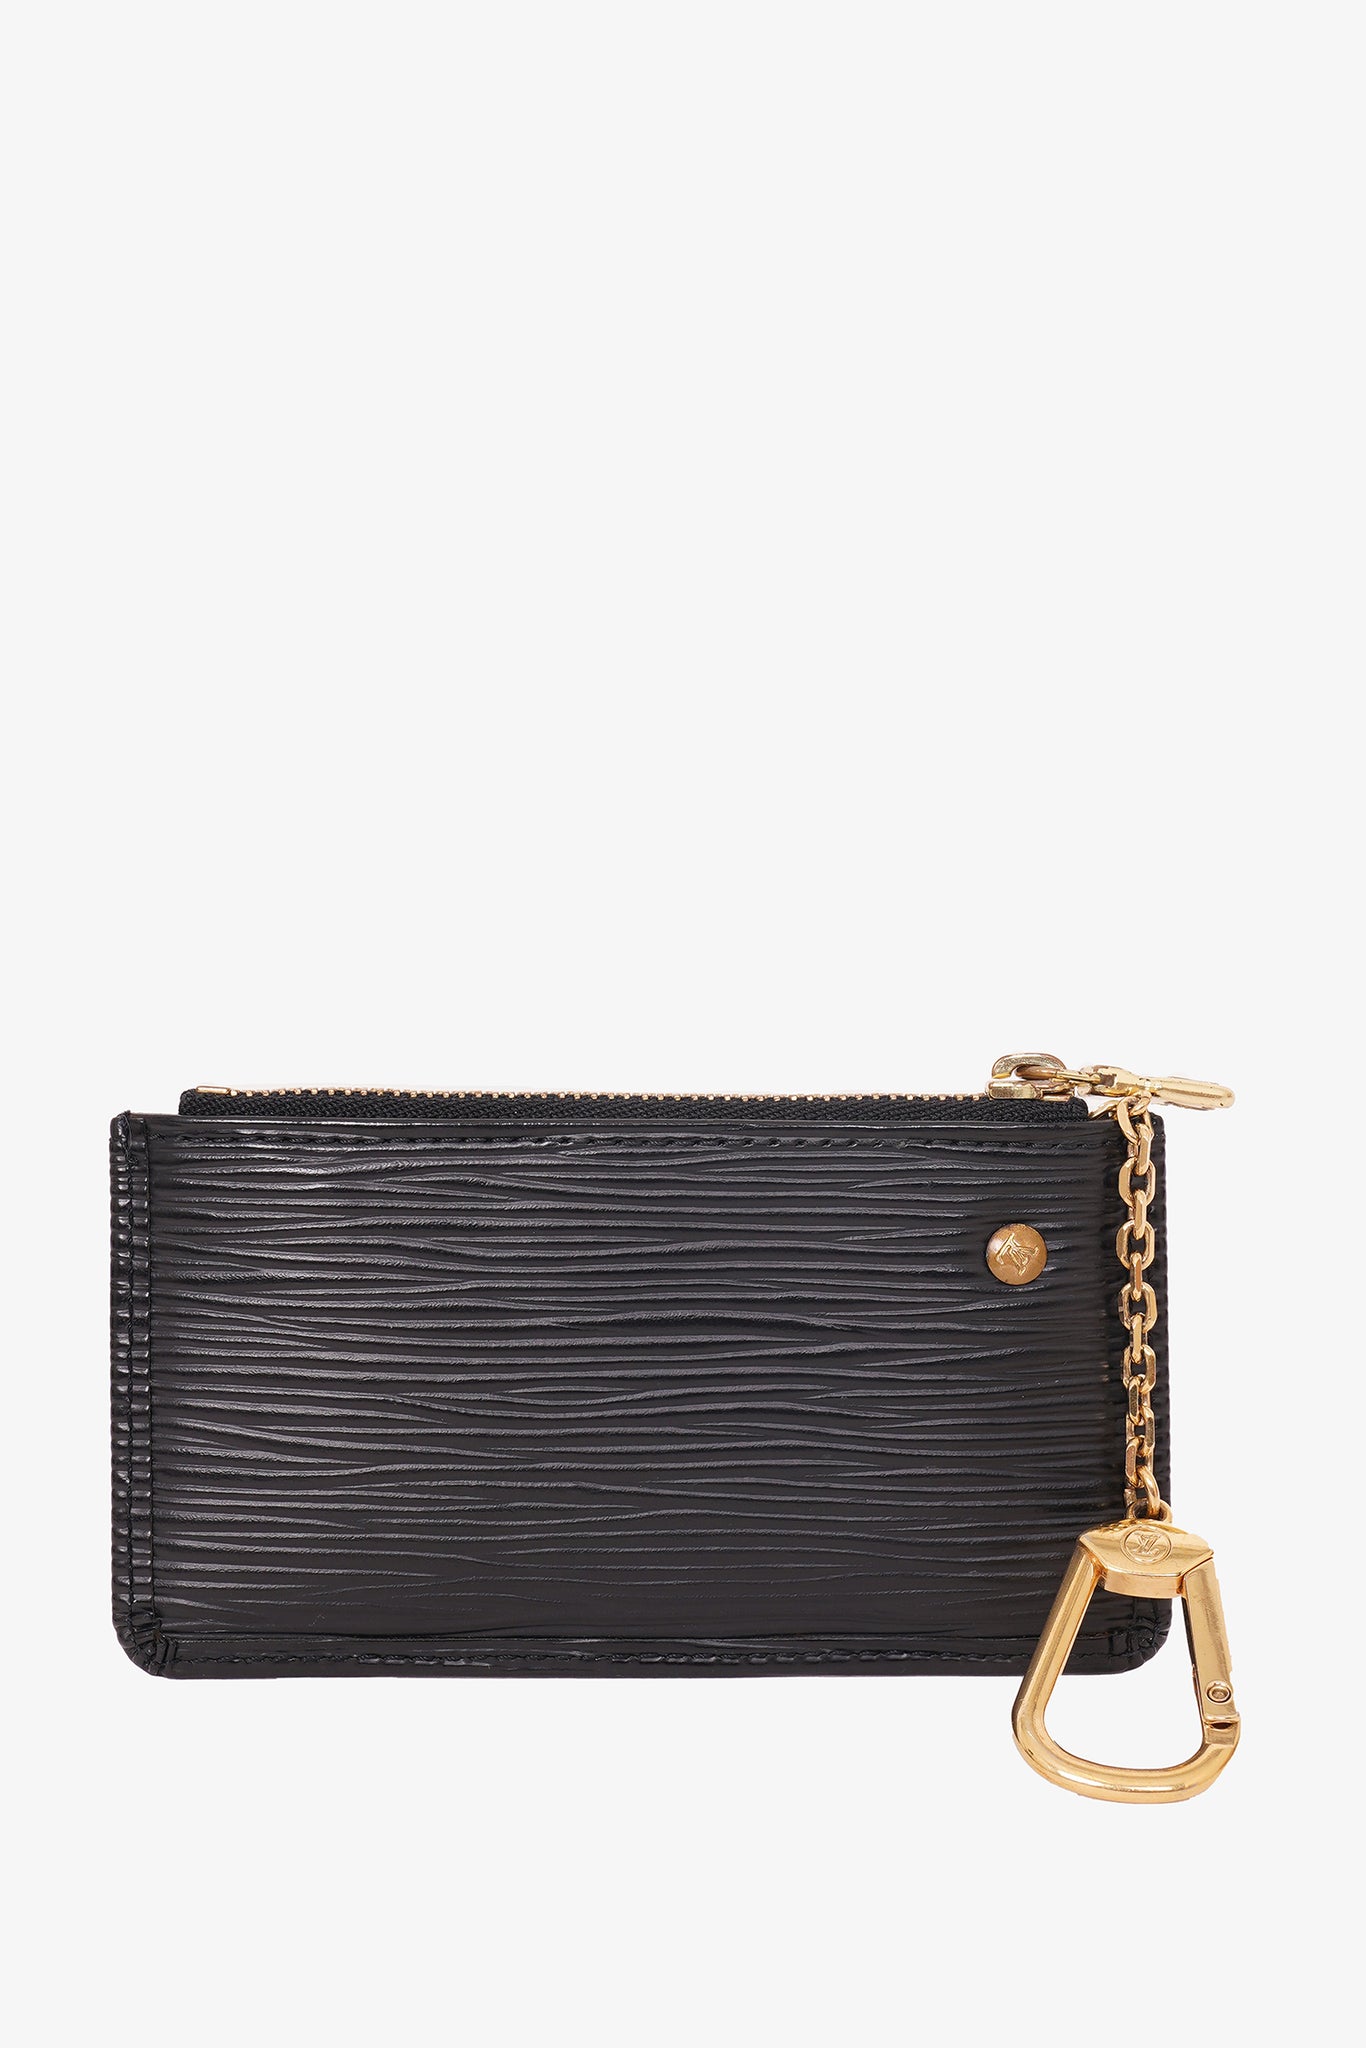 Louis Vuitton Black Epi Leather 'Twist' Wallet on Chain Gold